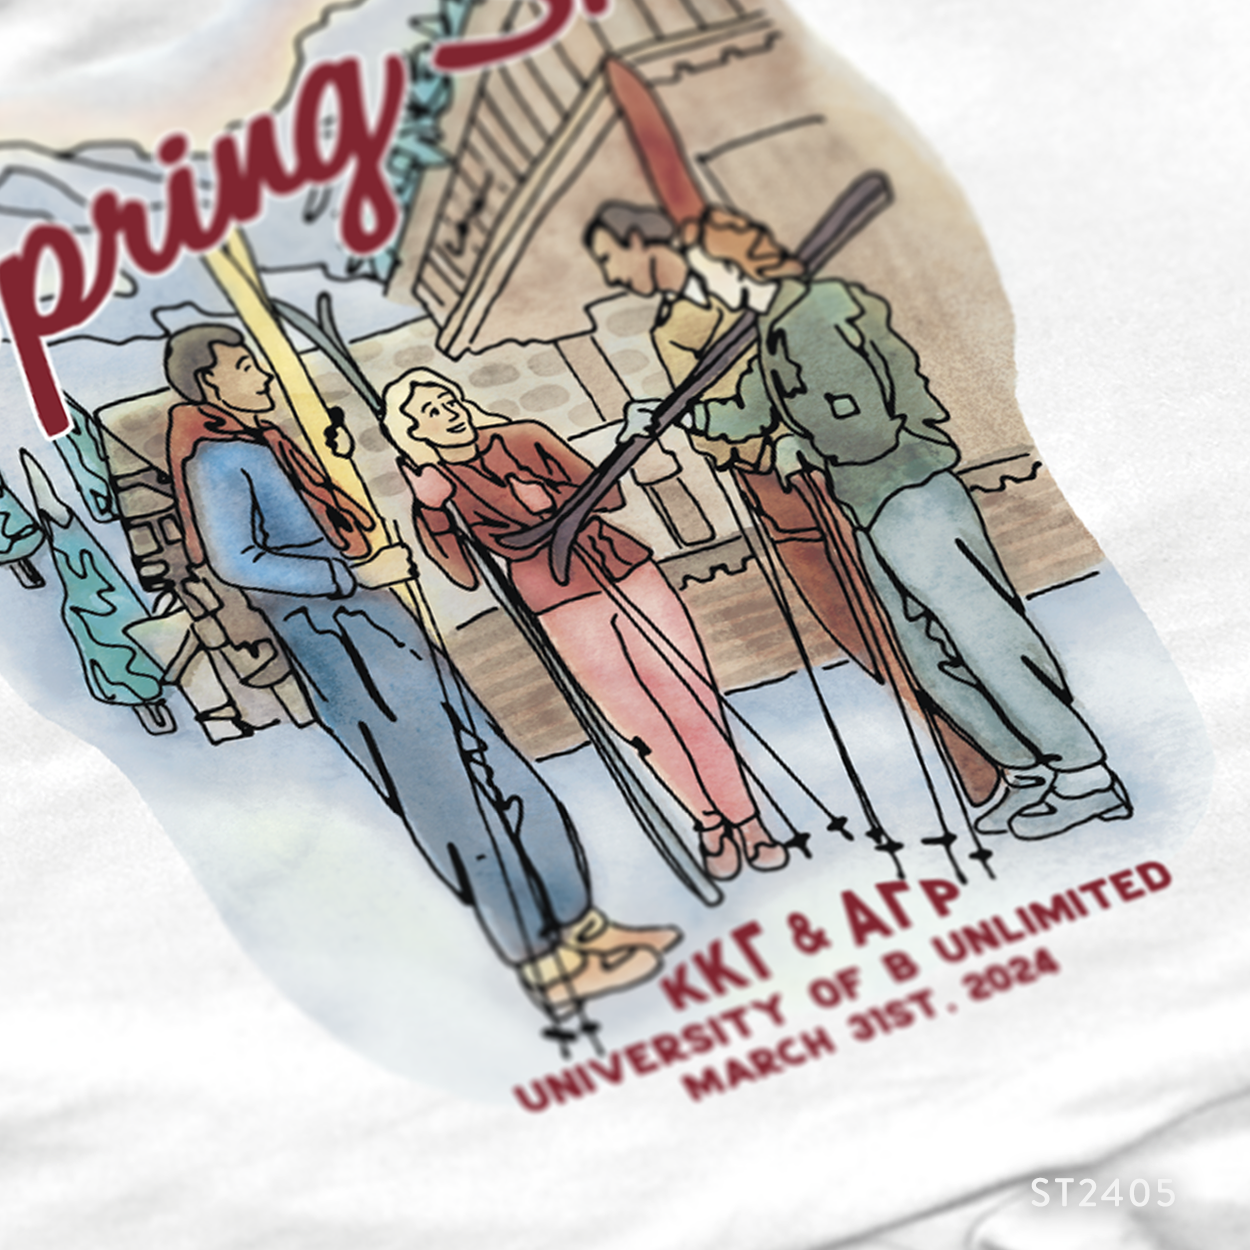 Kappa Kappa Gamma Spring Ski Event T-Shirt Design